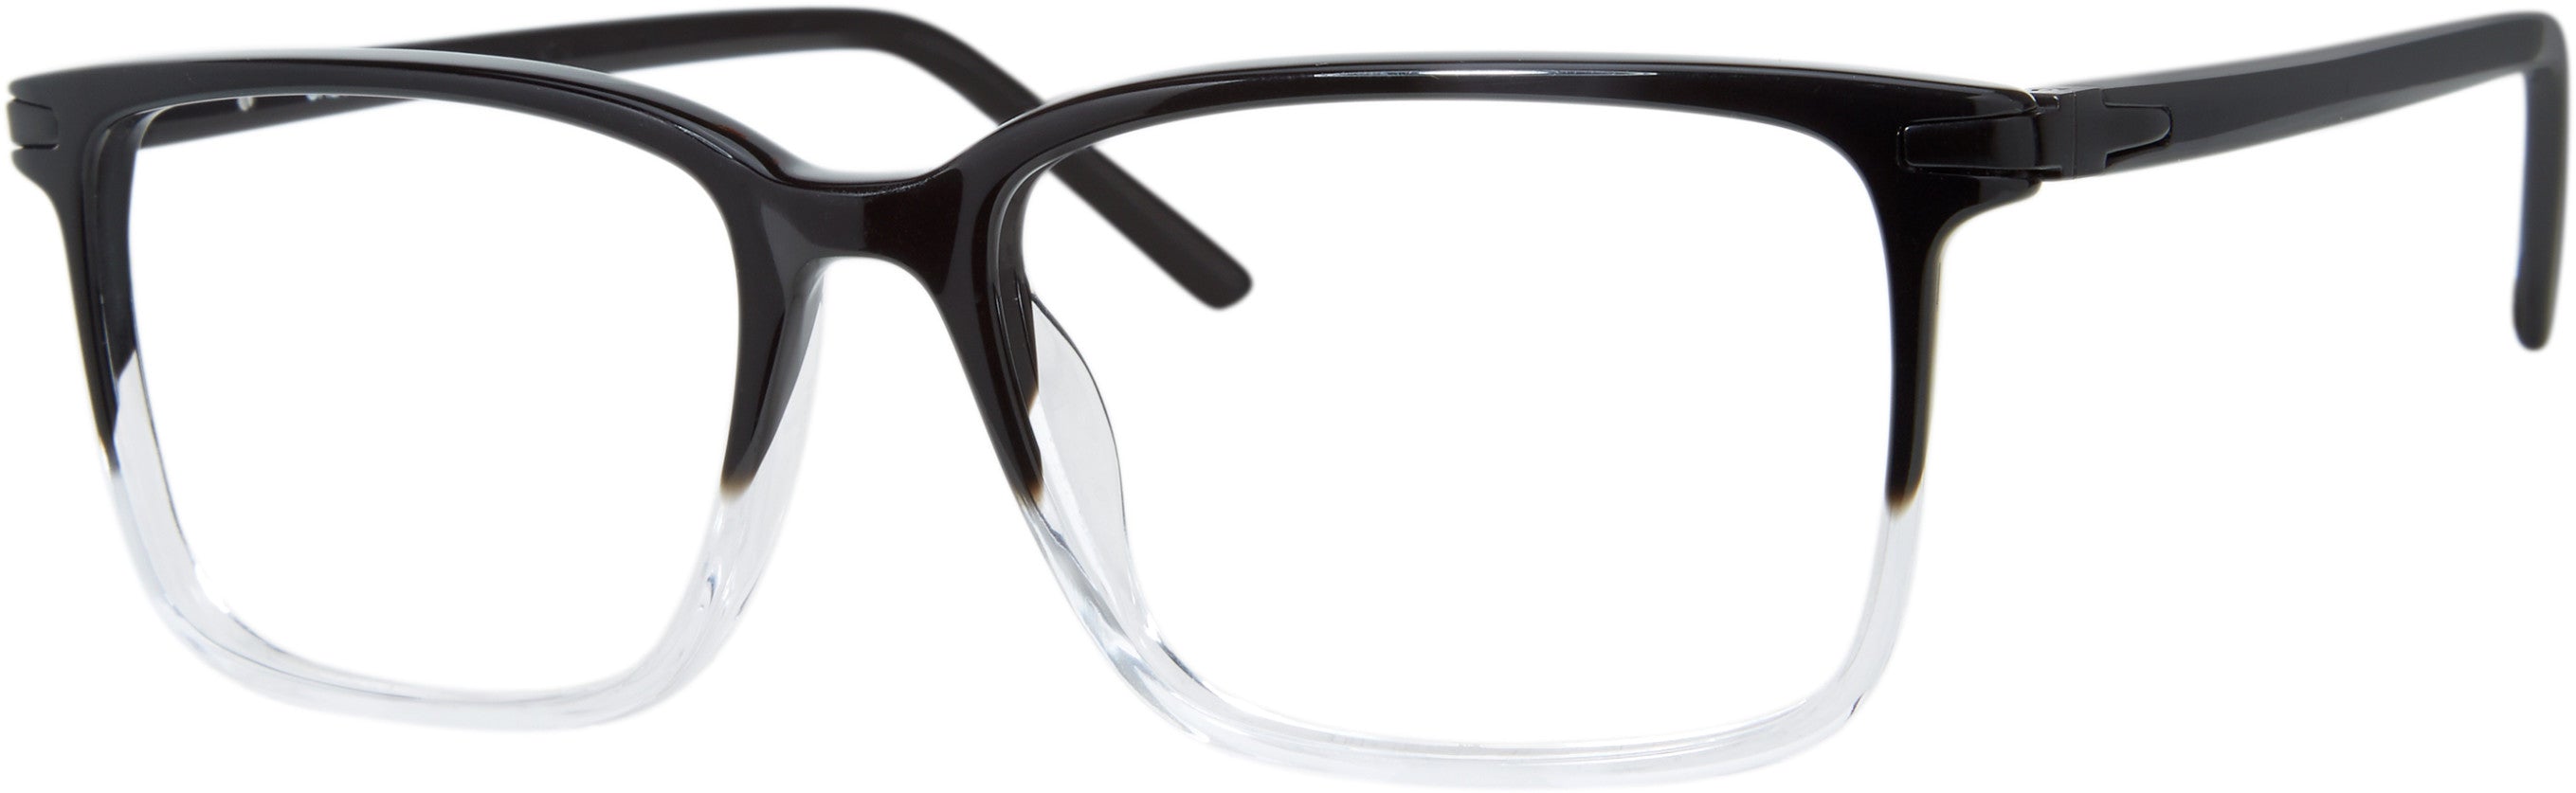  Chesterfield 76XL Square Eyeglasses 07C5-07C5  Black Crystal (00 Demo Lens)